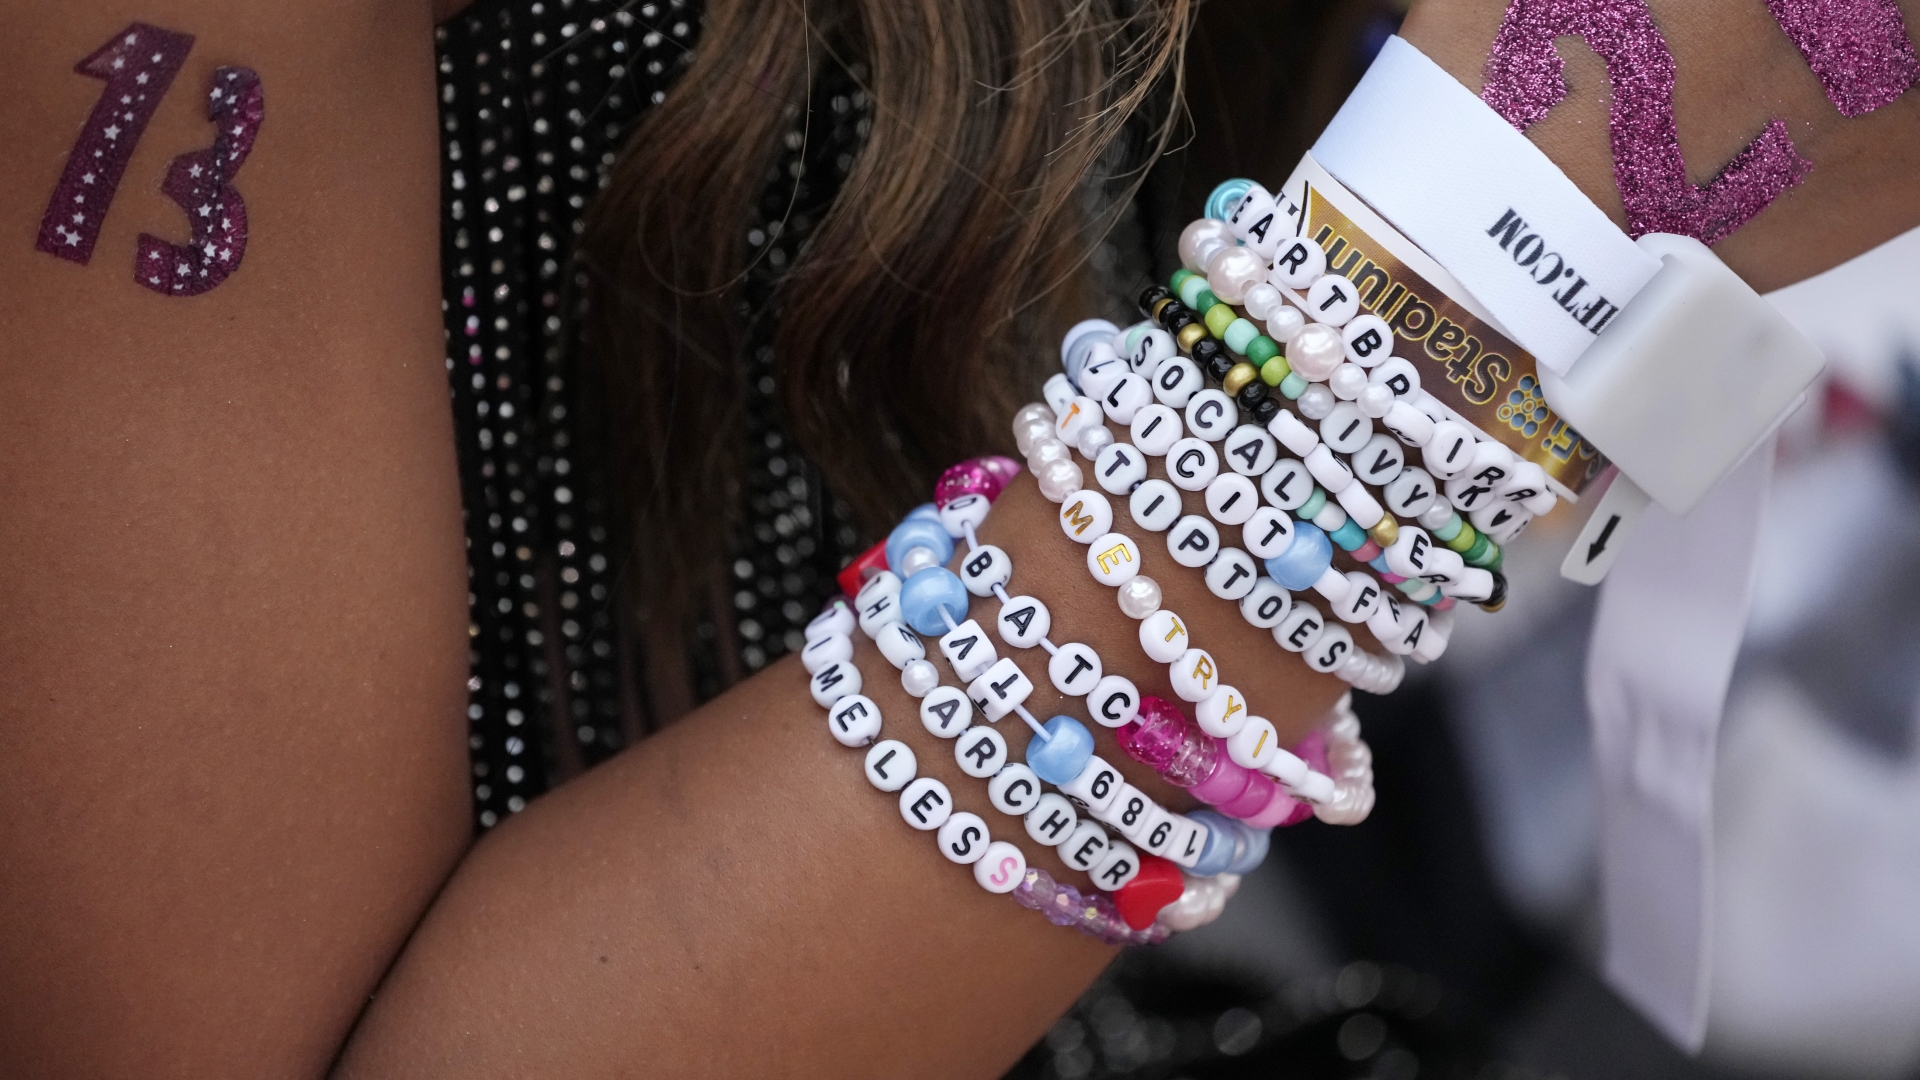 Taylor Swift friendship bracelets connect fans, helps make extra cash